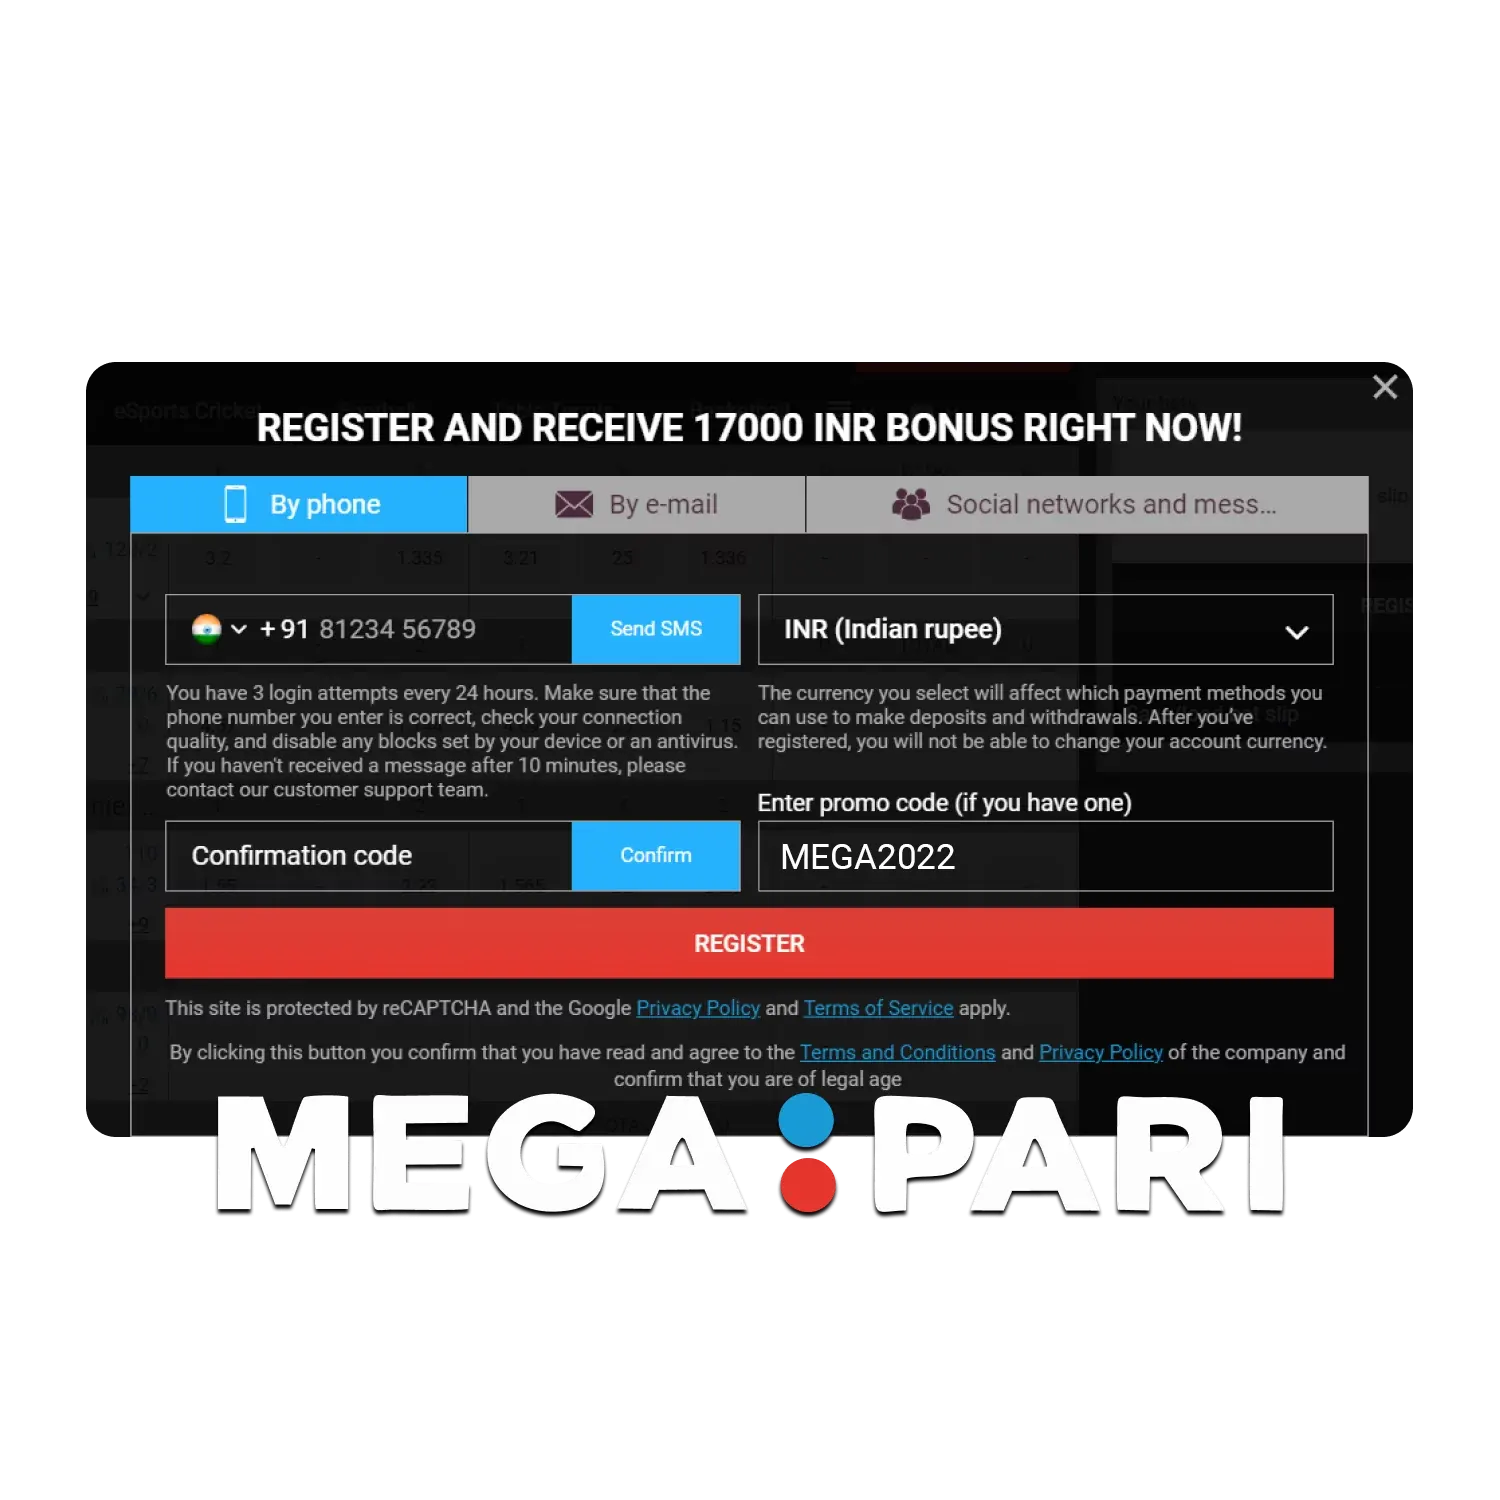 Use the Megapari promo code and get a special bonus.